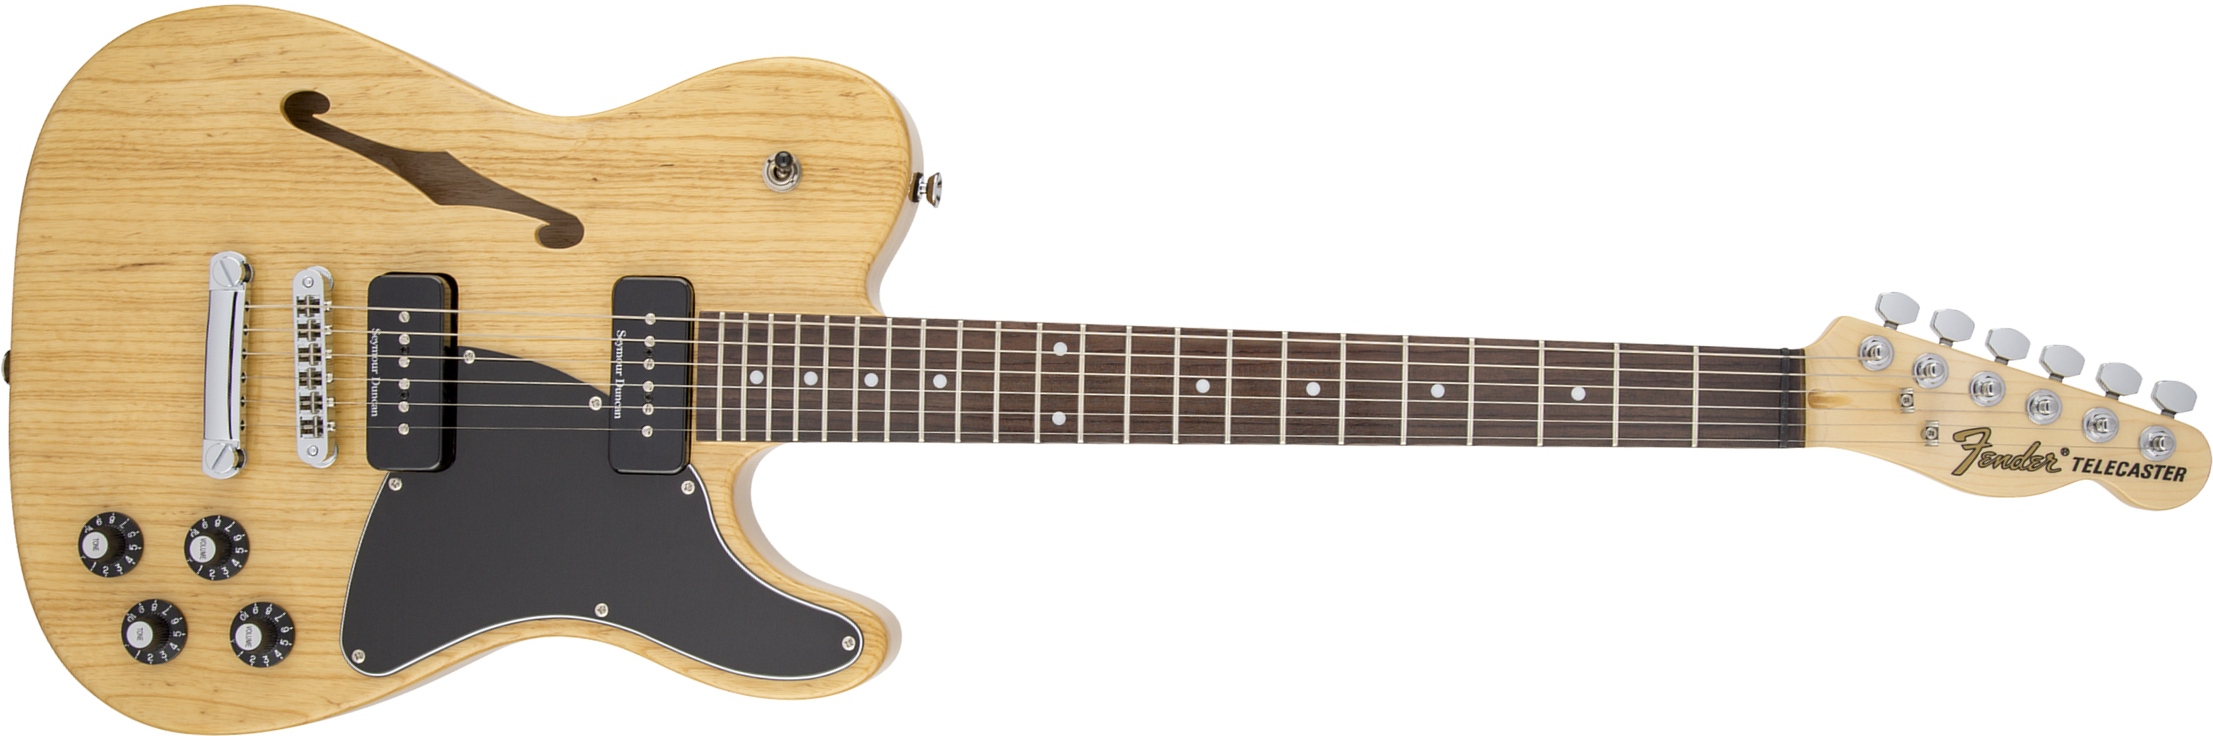 Fender Jim Adkins Tele Ja-90 Mex Signature 2p90 Lau - Natural - E-Gitarre in Teleform - Main picture